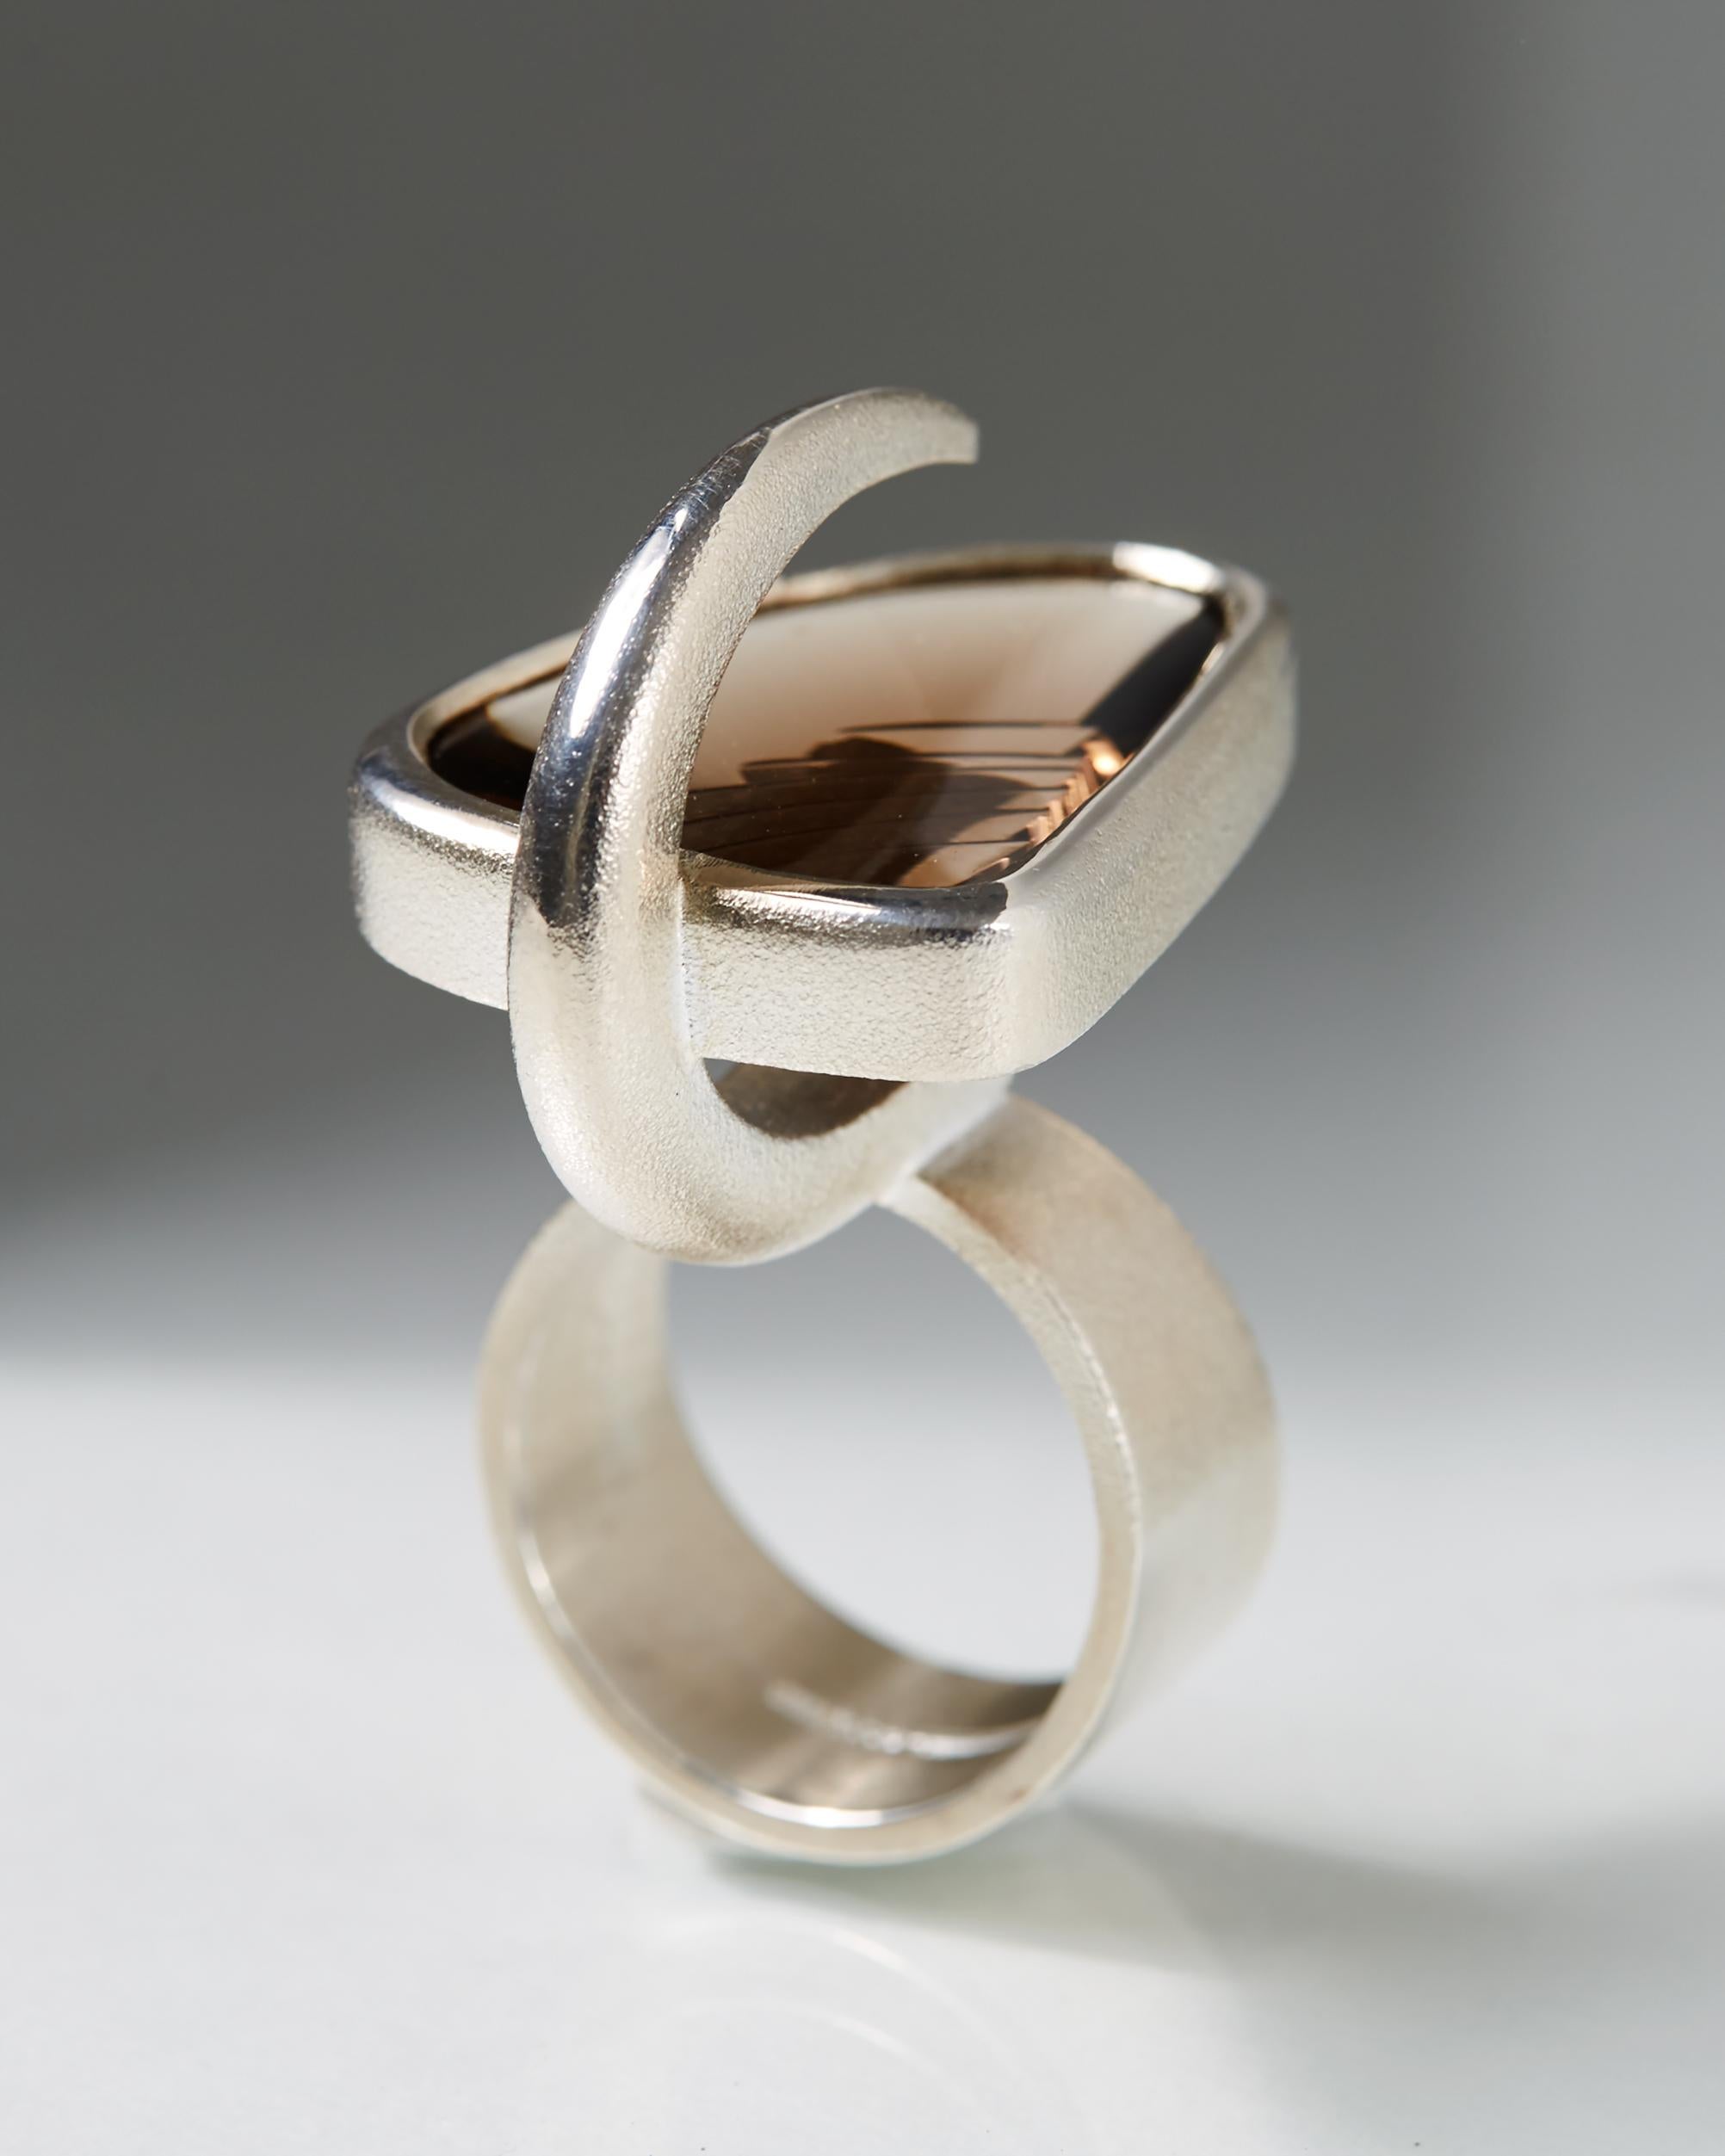 Women's or Men's “Isamo” Ring Designed by Björn Weckström for Lapponia, Finland, 2008